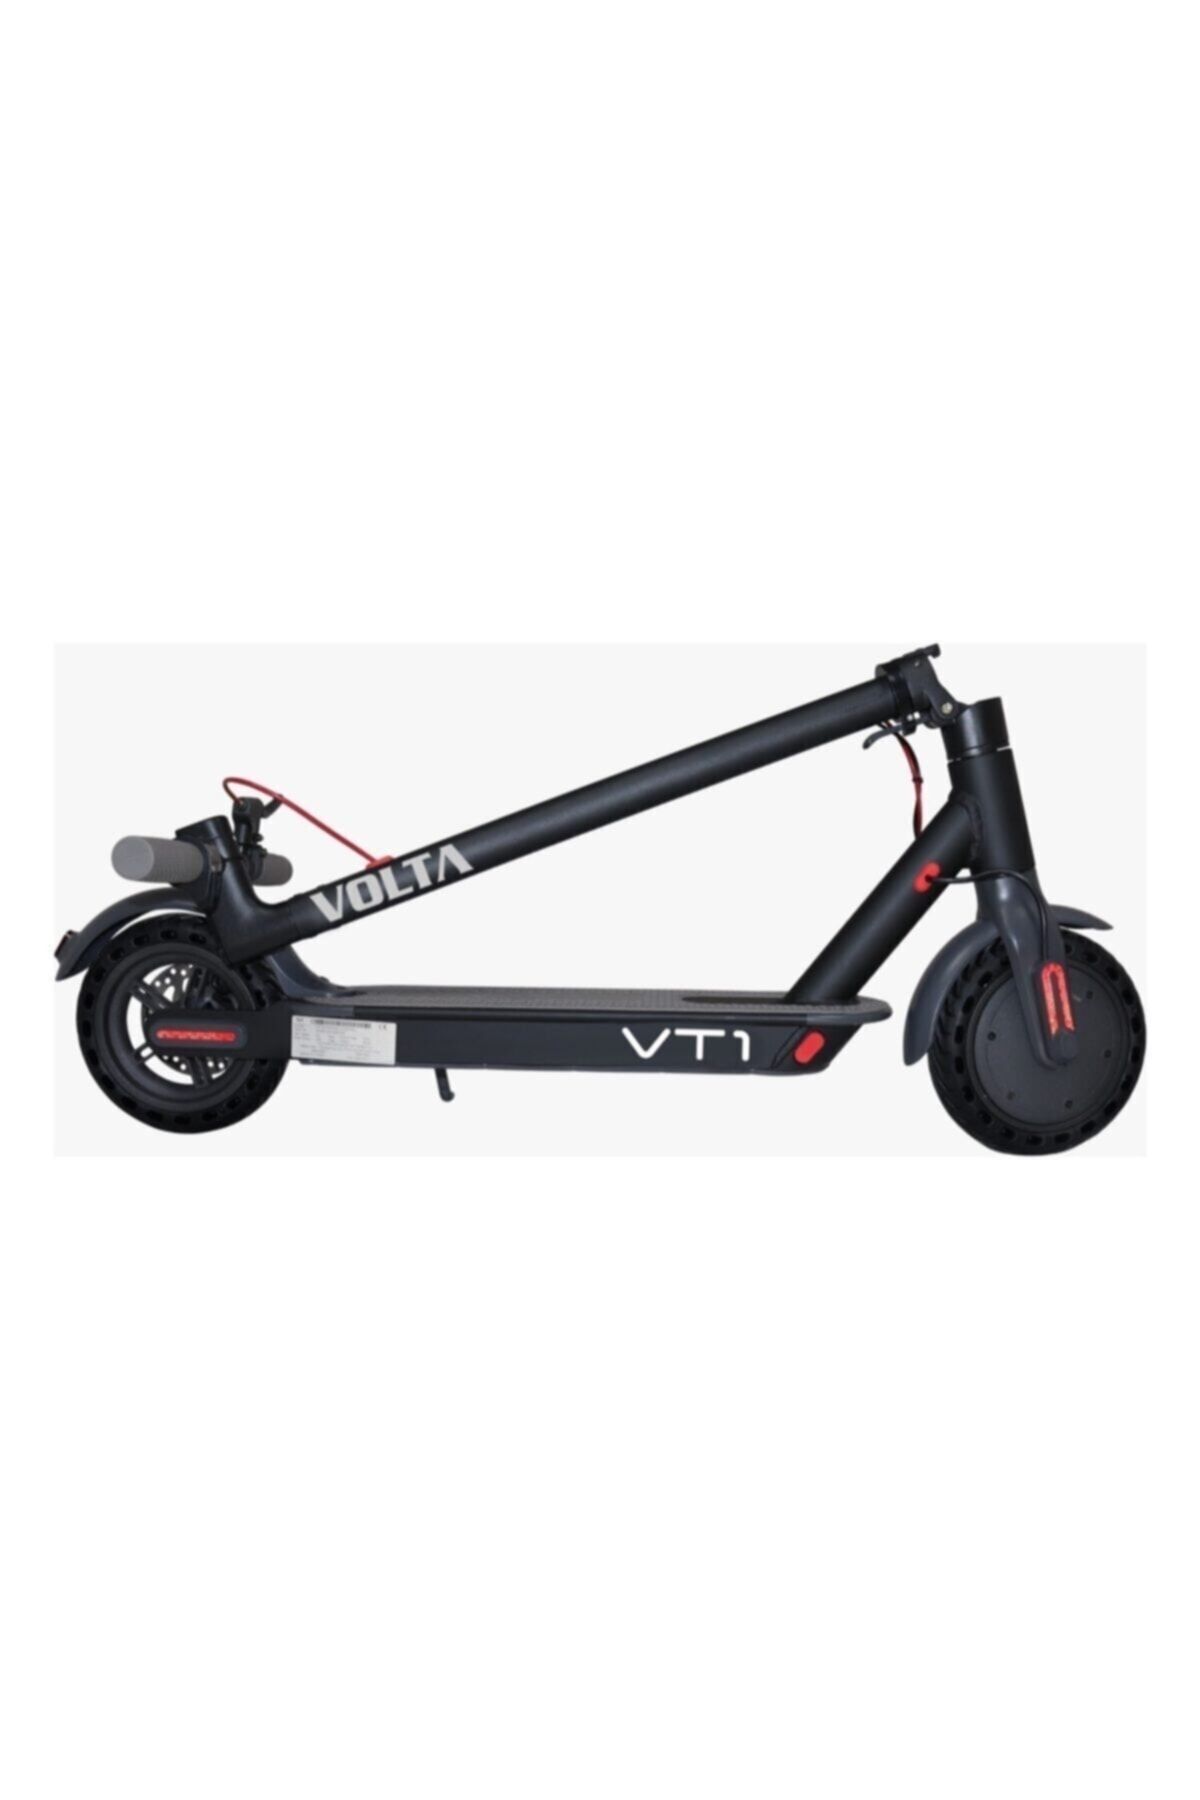 Volta VT1 Elektrikli Scooter Katlanabilir Kick Fiyatı, - Trendyol